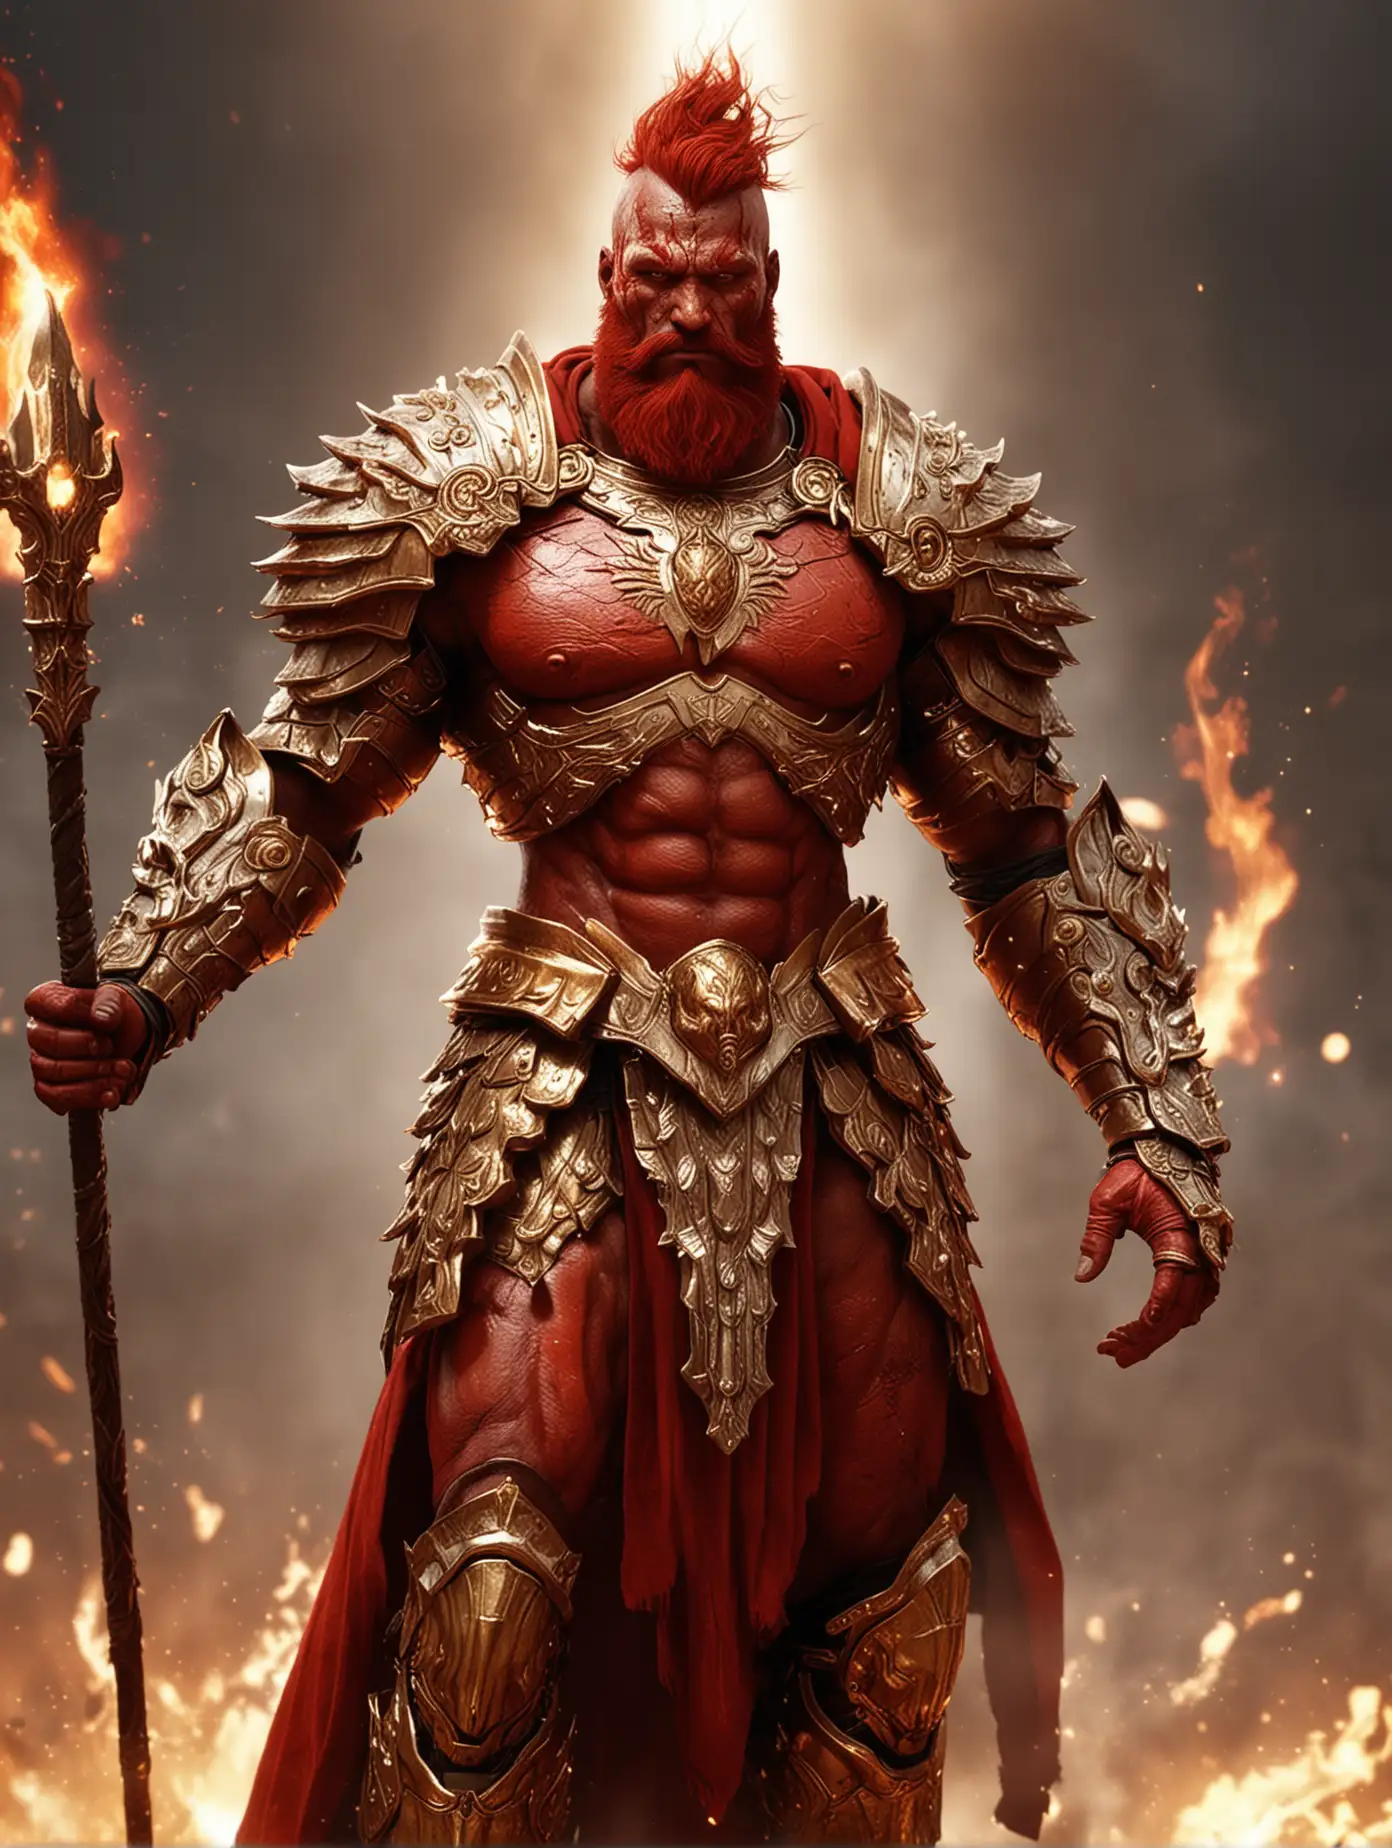 RedSkinned War God in Gold Centurion Armor Amidst Celestial Flames